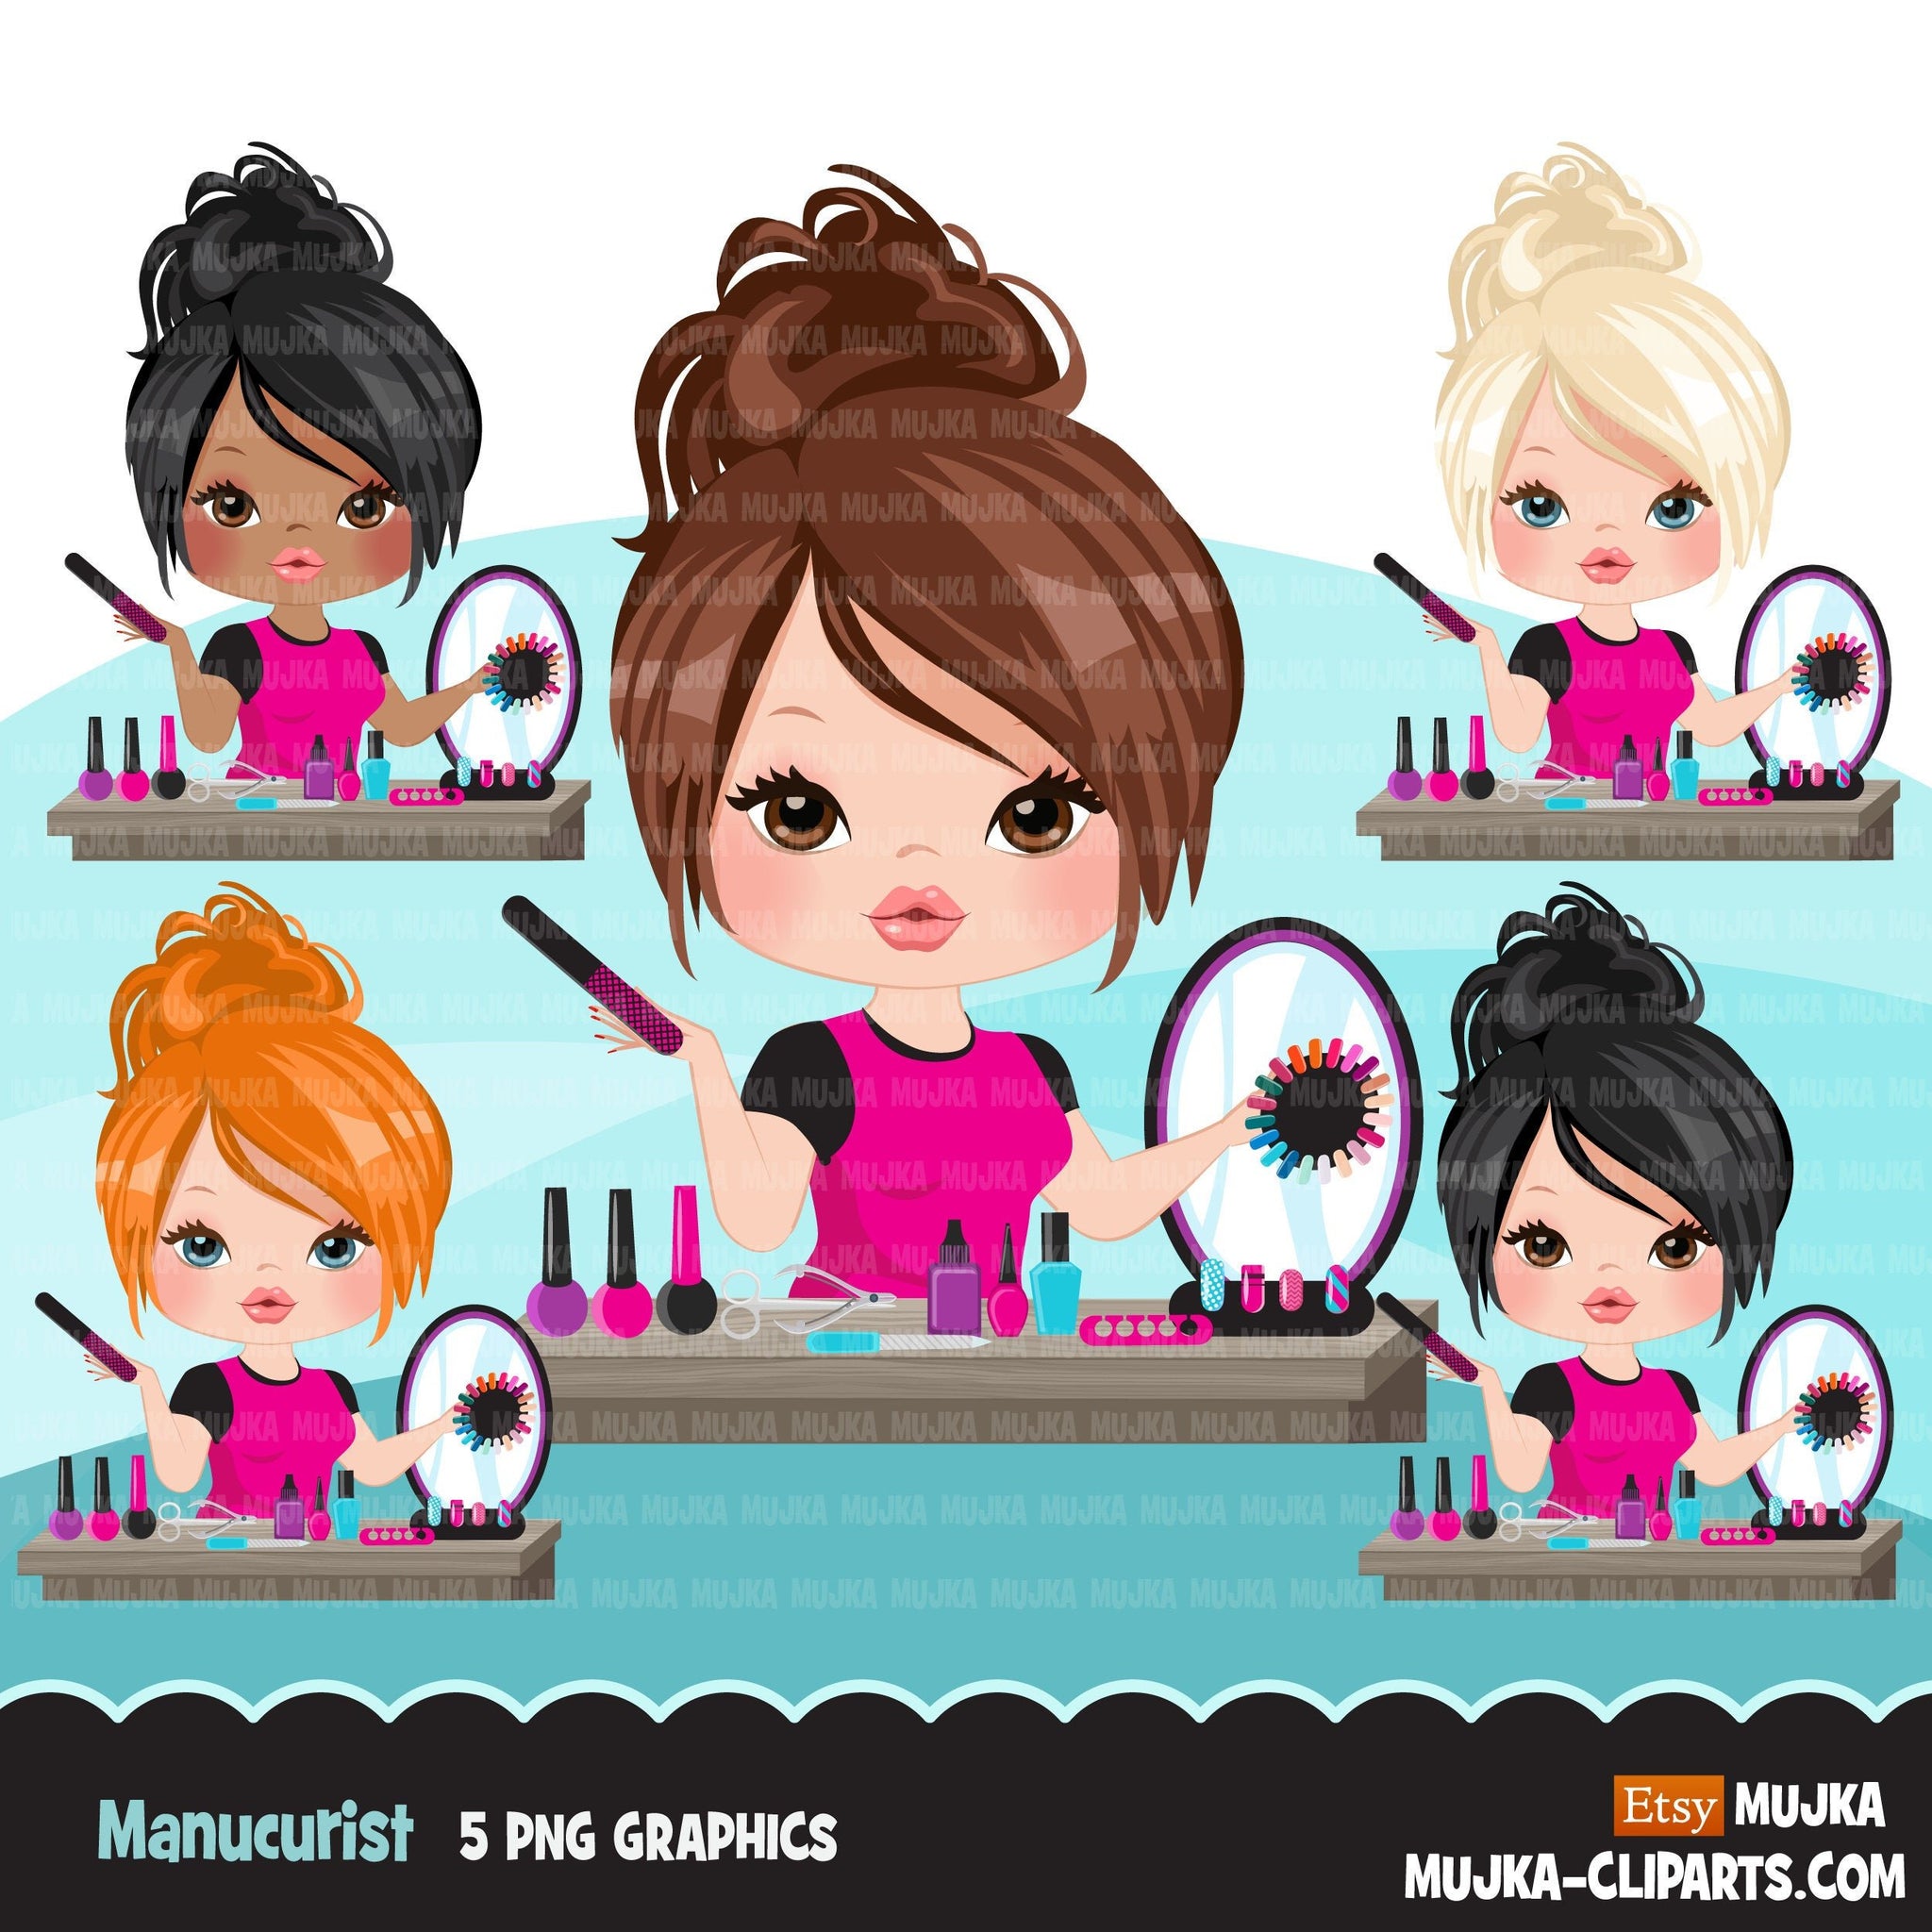 Woman manicurist avatar clipart with nail art graphics girl, print and cut T-Shirt Designs, nail technician clip art